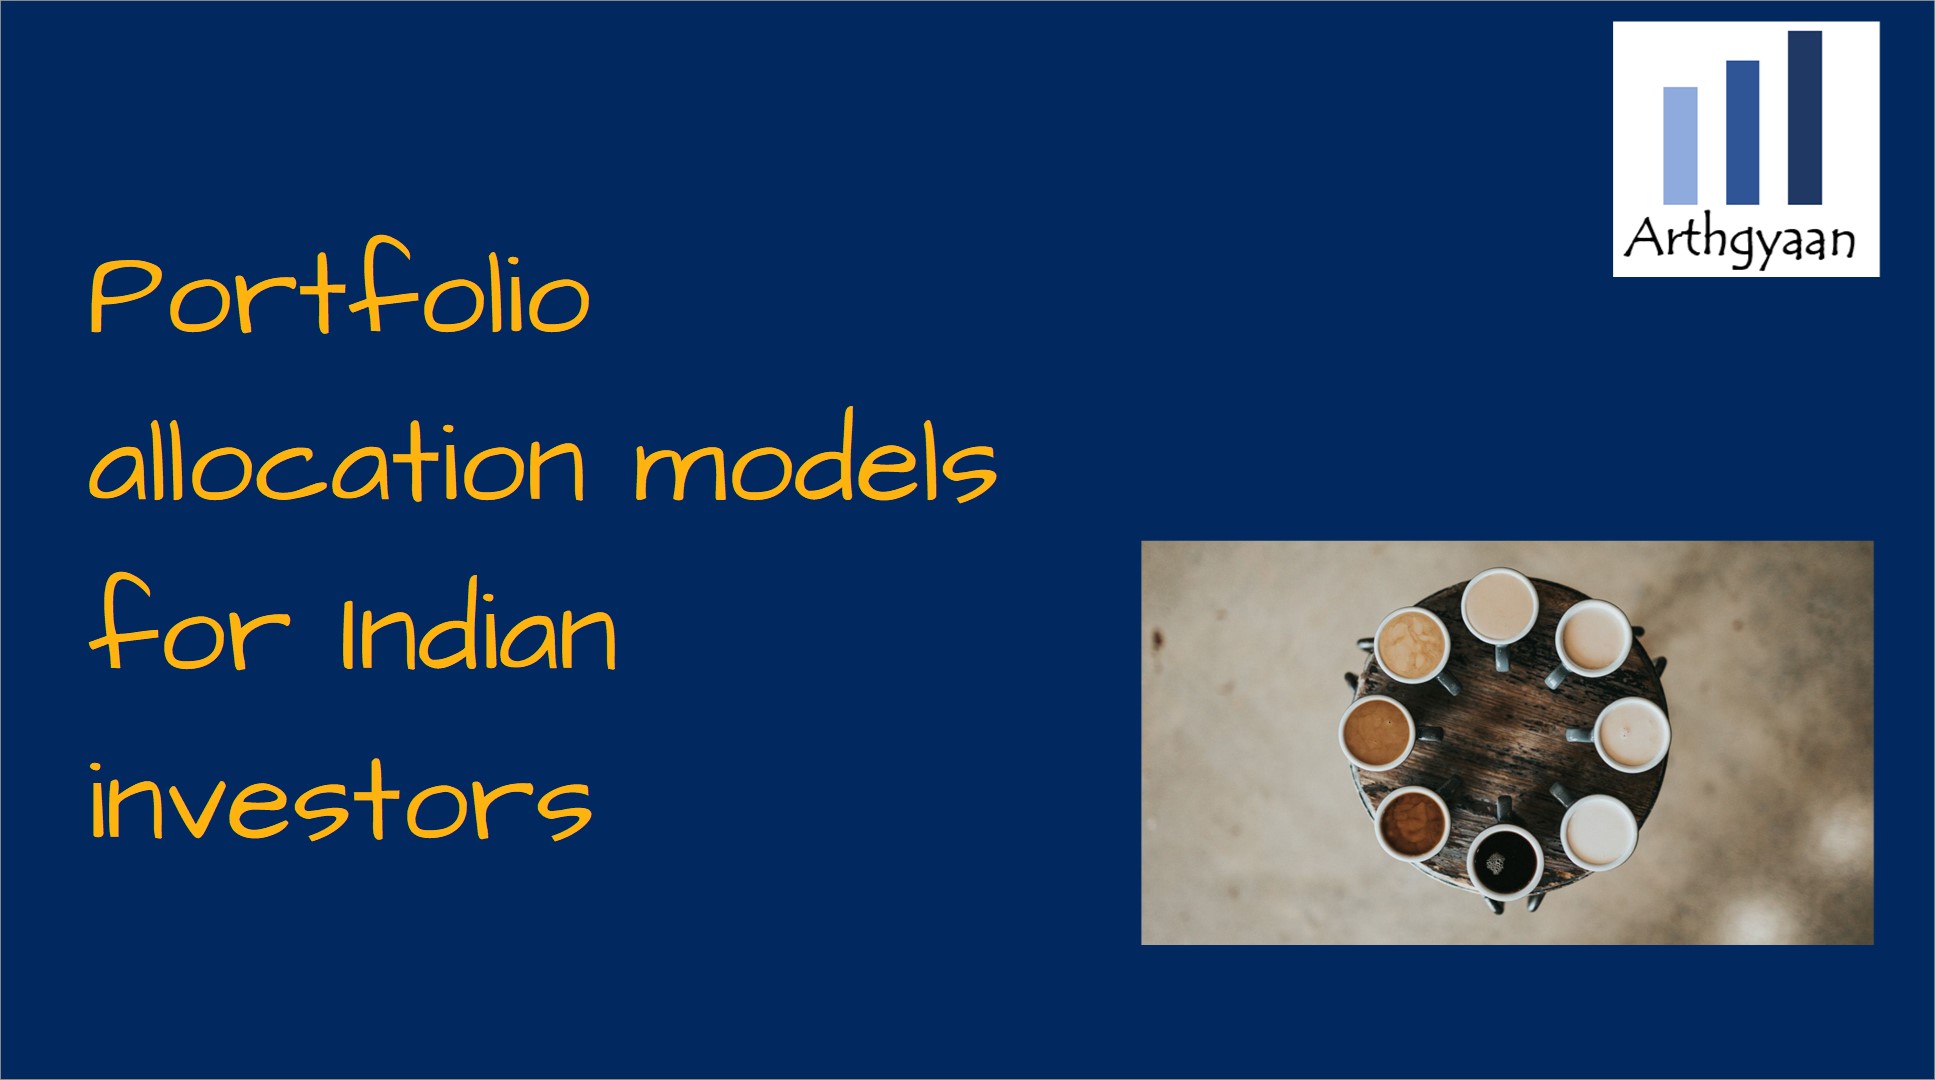 Portfolio allocation models for Indian investors